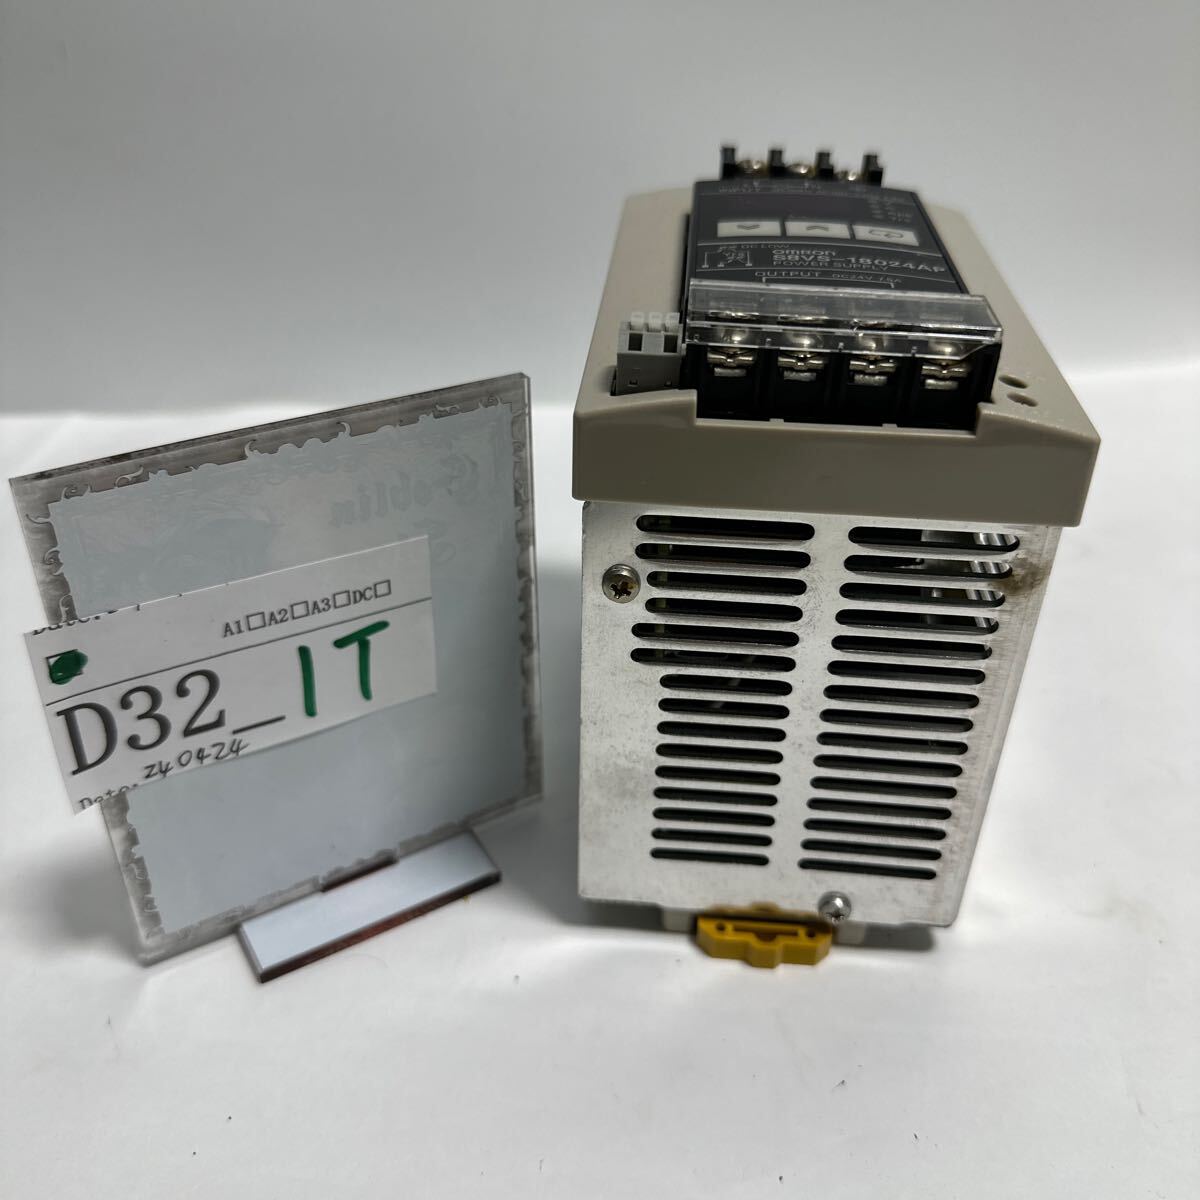 「D32_1T」中古OMRON オムロン スイッチング・パワーサプライ S8VS-18024AP 動作品(240424)_画像2